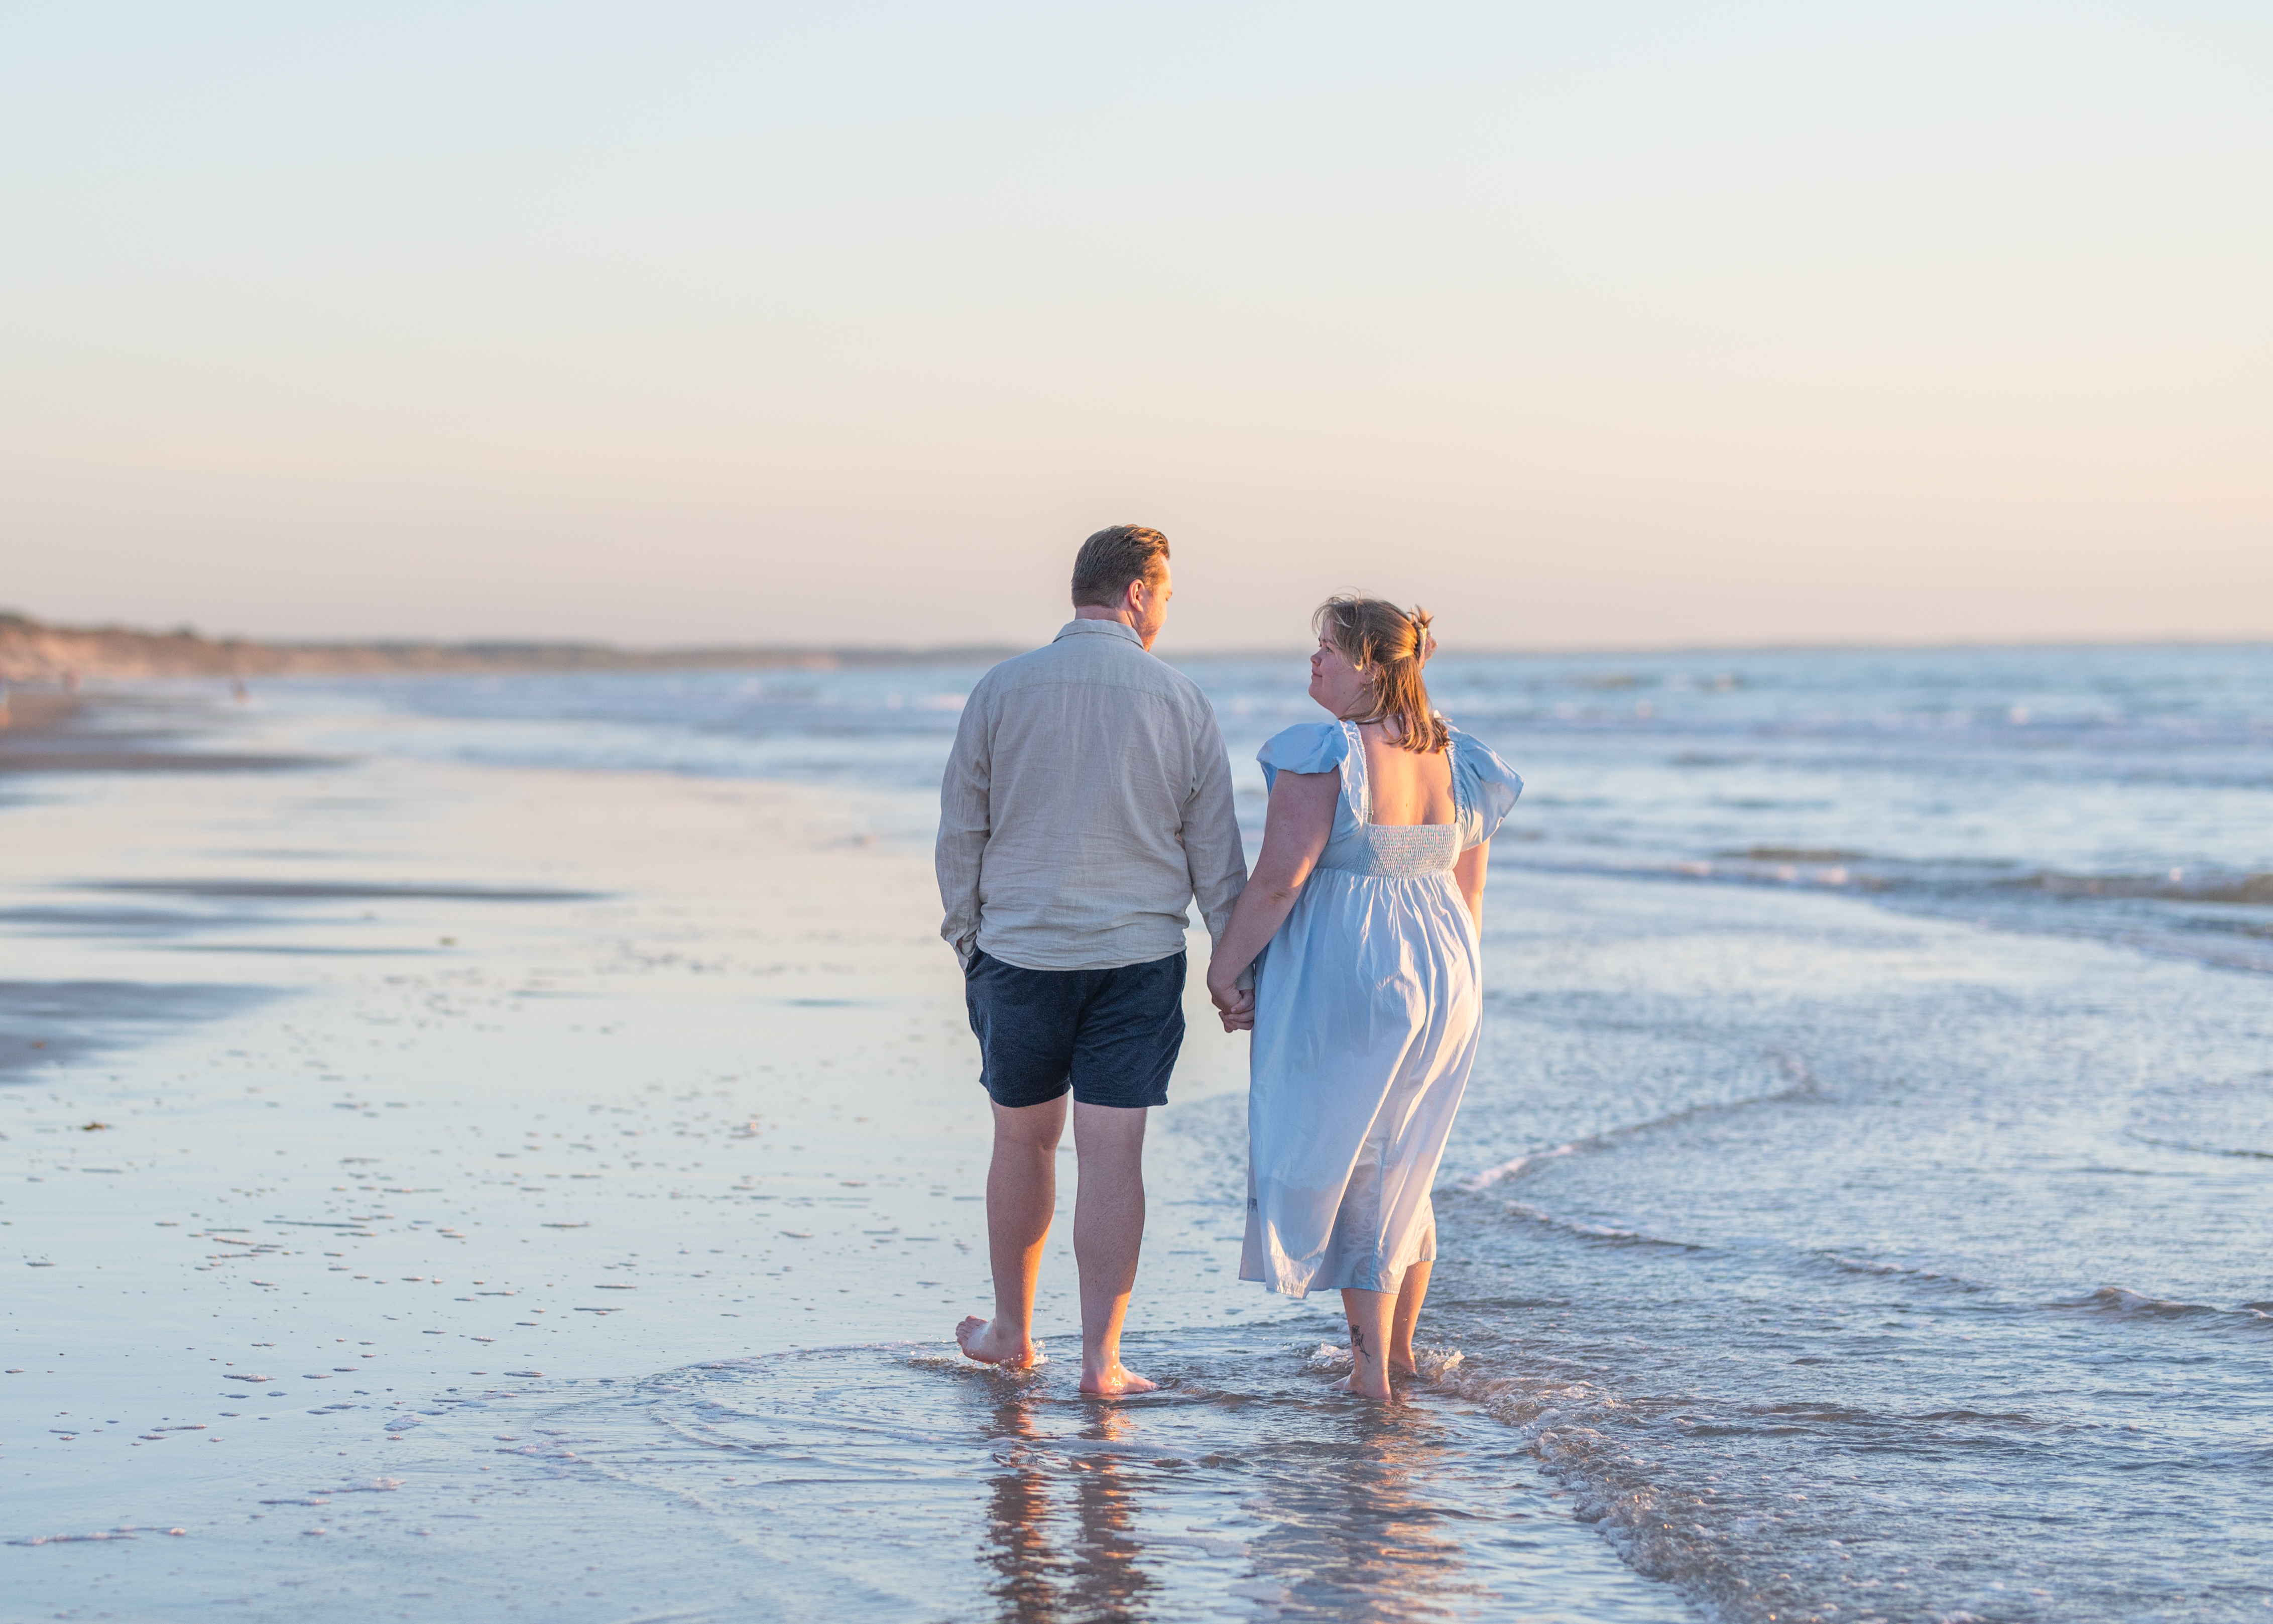 Parfotografering - Kjærestepar som går langs en strand, holder hender